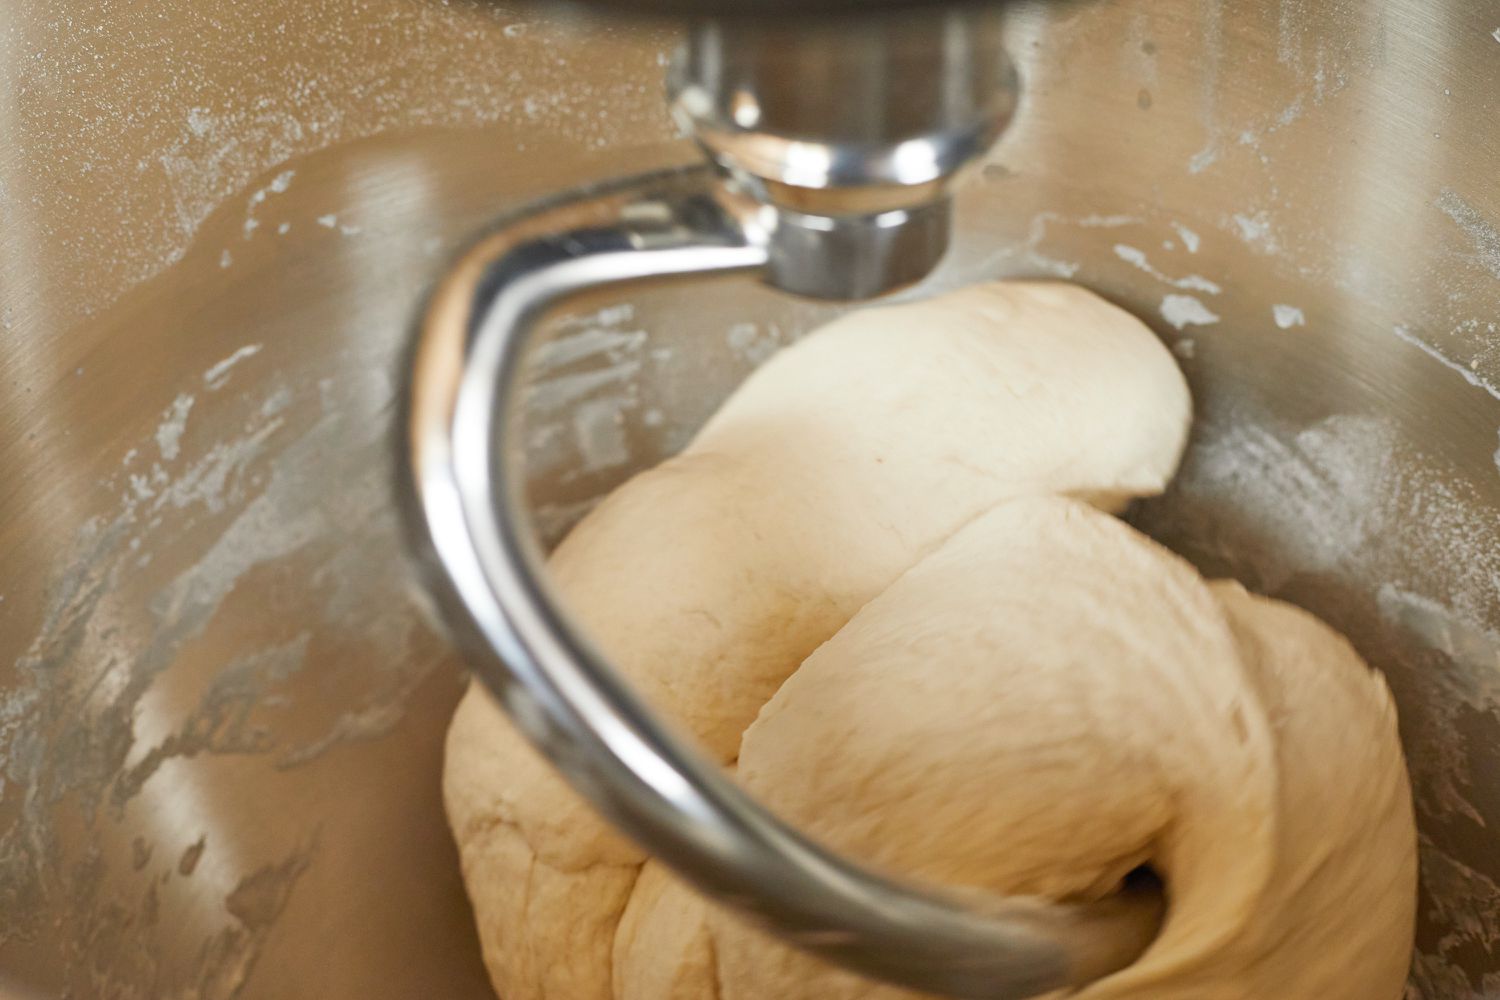 GE Profile mixer kneading dough